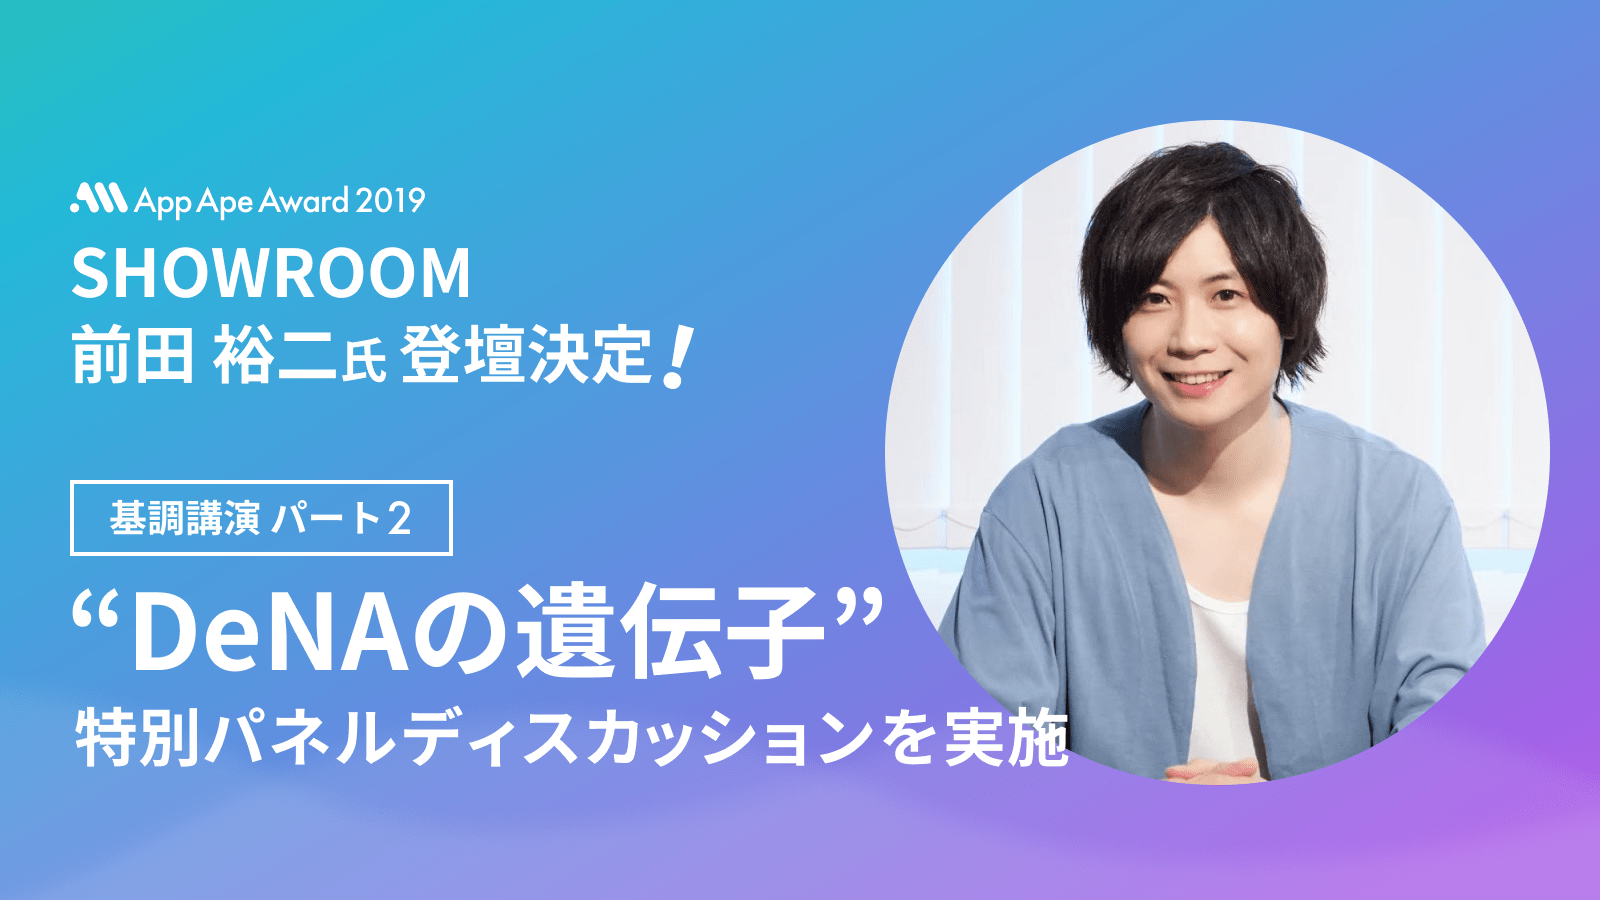 App Ape Award 2019、SHOWROOM・前田裕二氏の登壇が決定